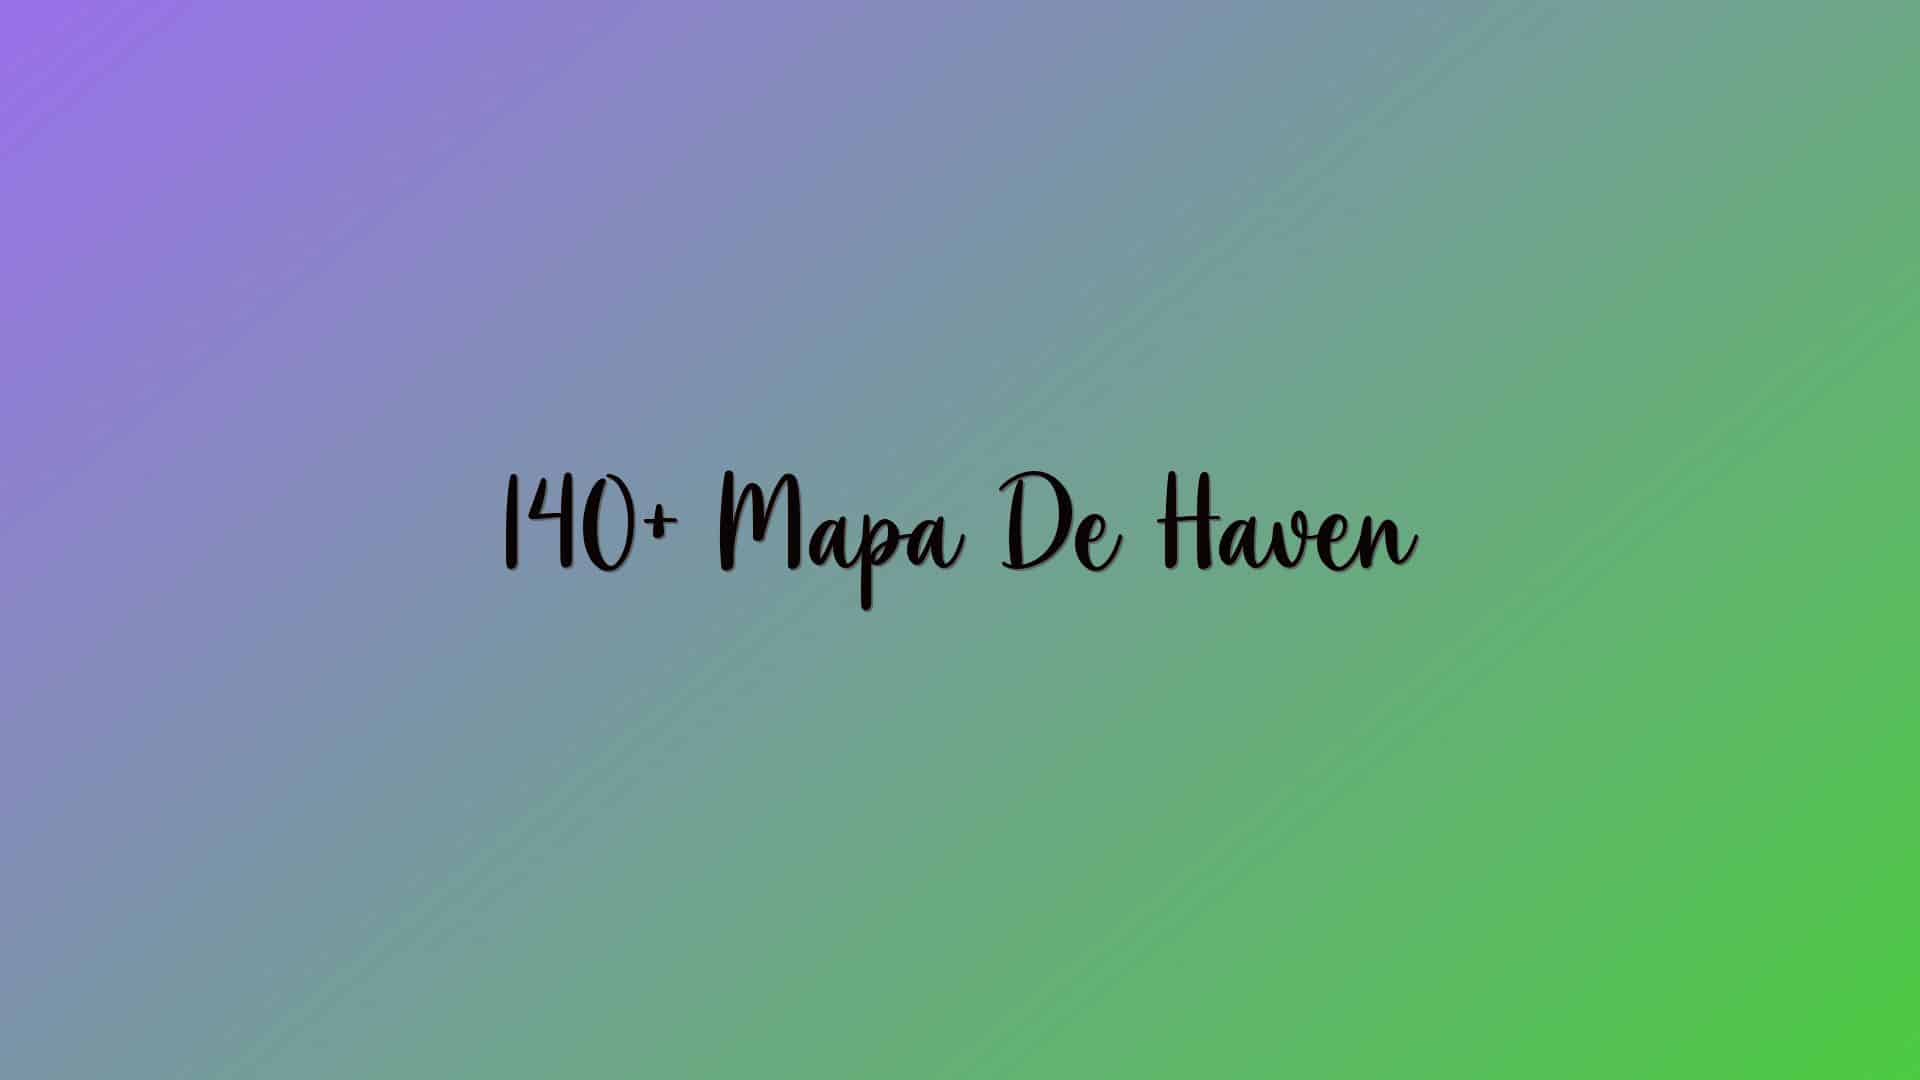 140+ Mapa De Haven